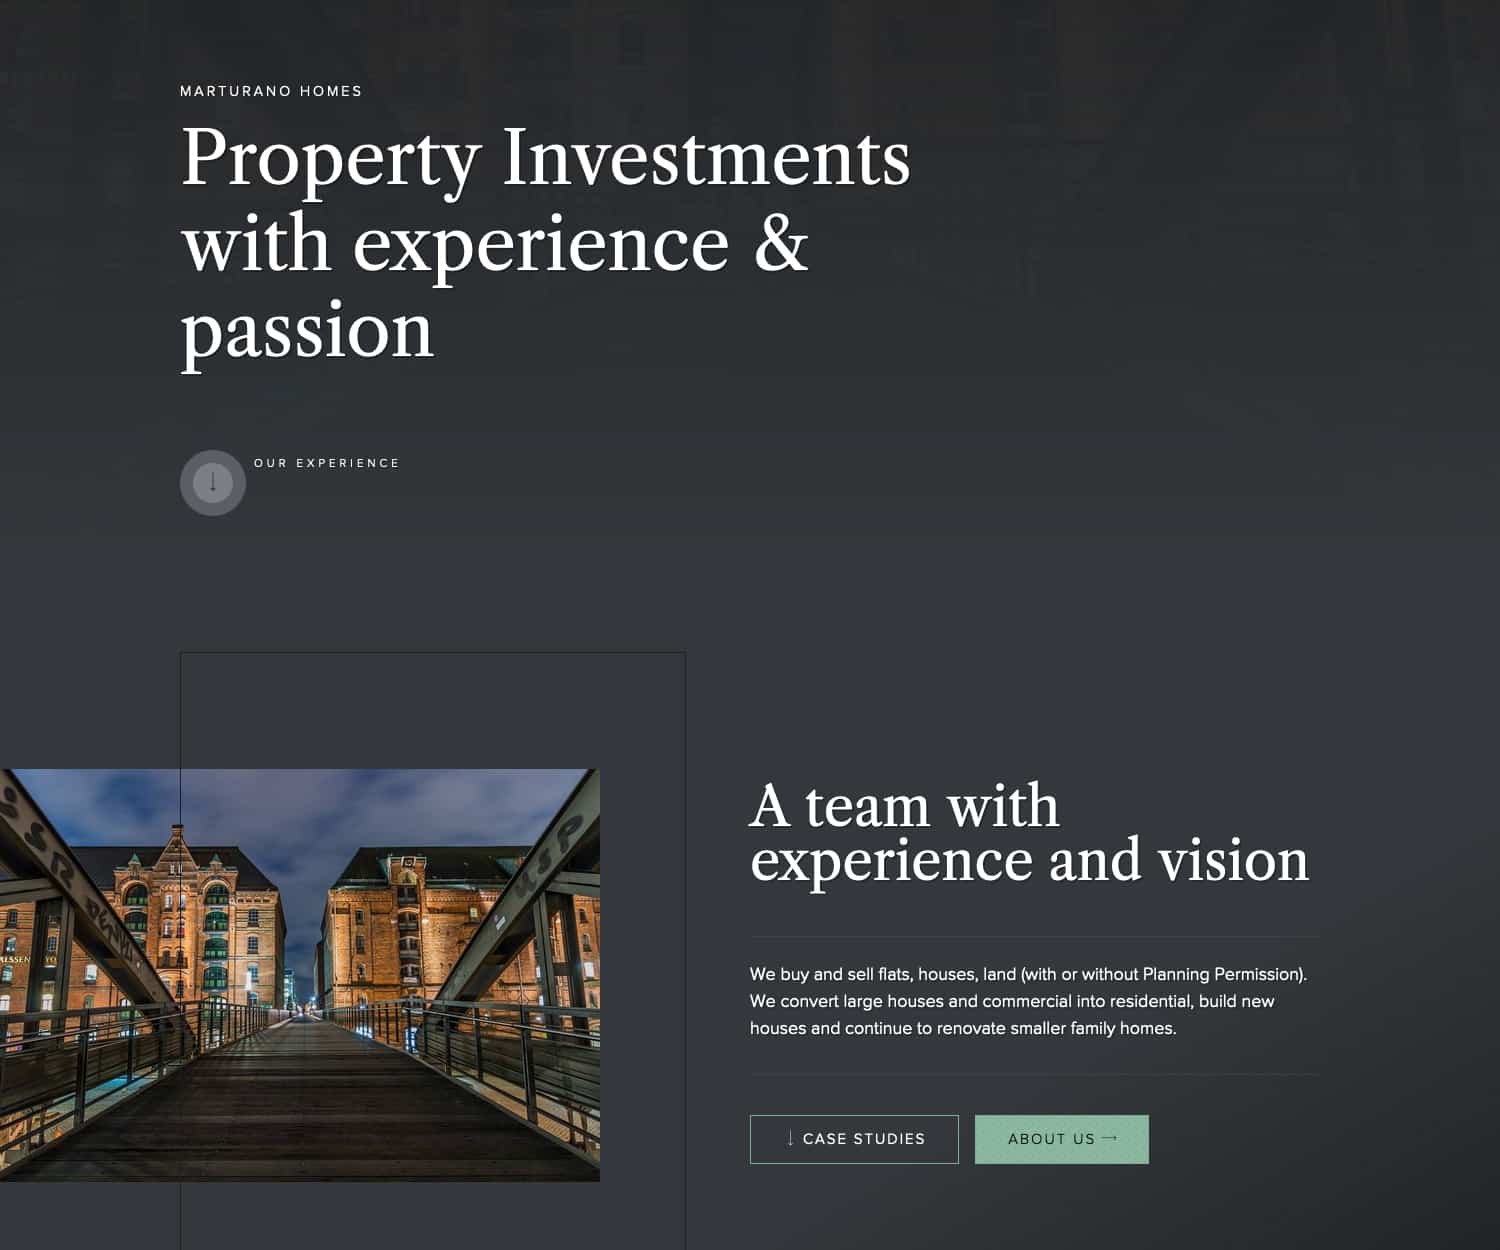 website design for property real estate business in Greenock